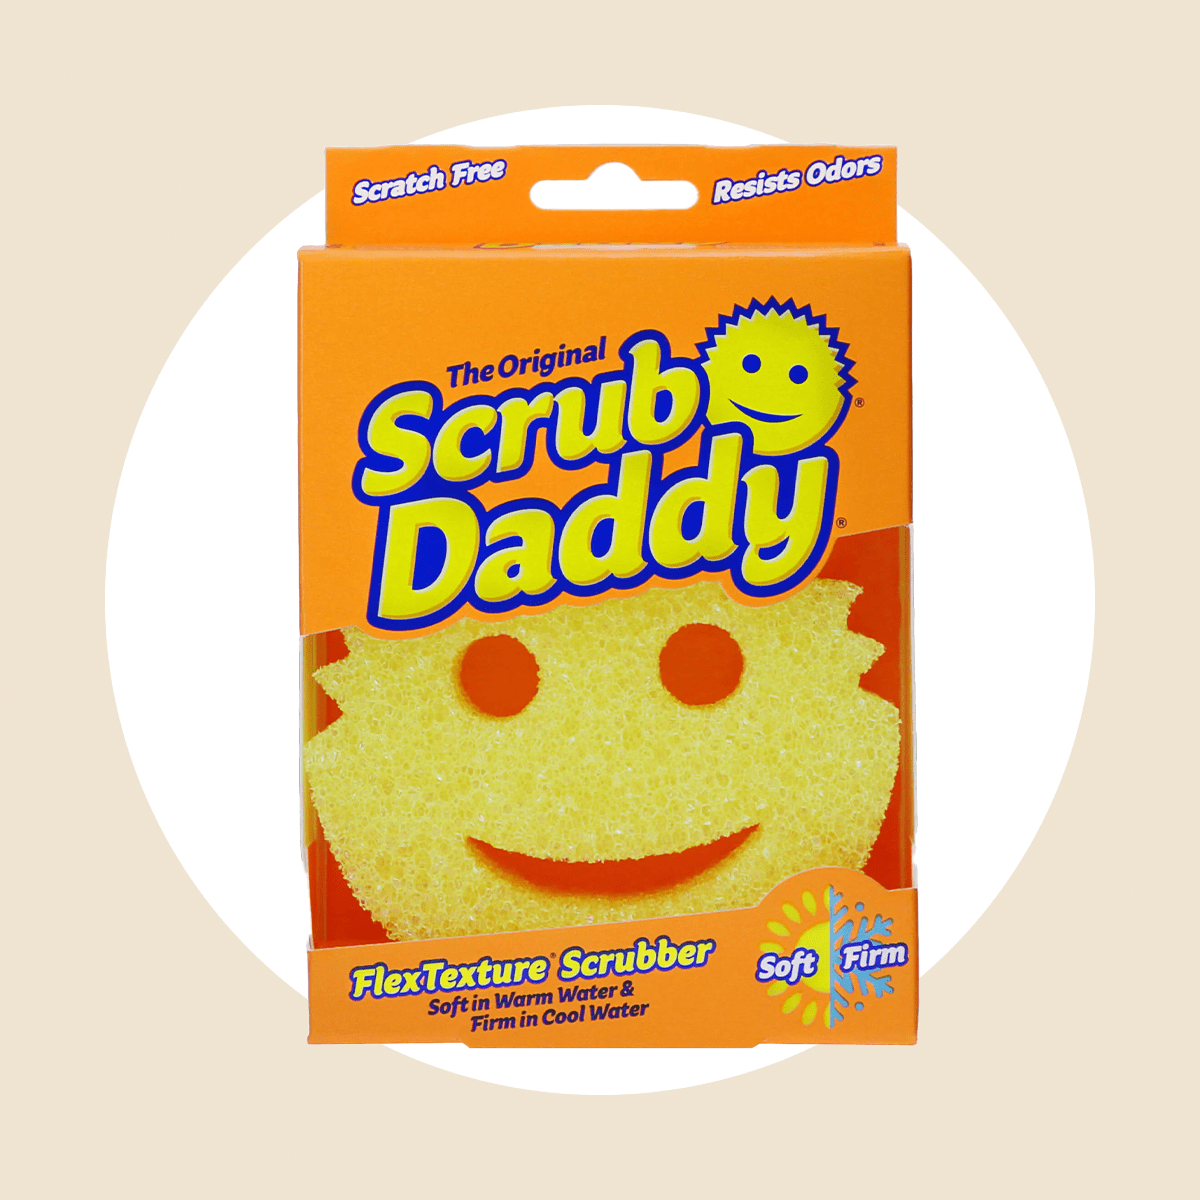 Scrub Daddy Non Scratch Sponge Ecomm Via Walmart.com